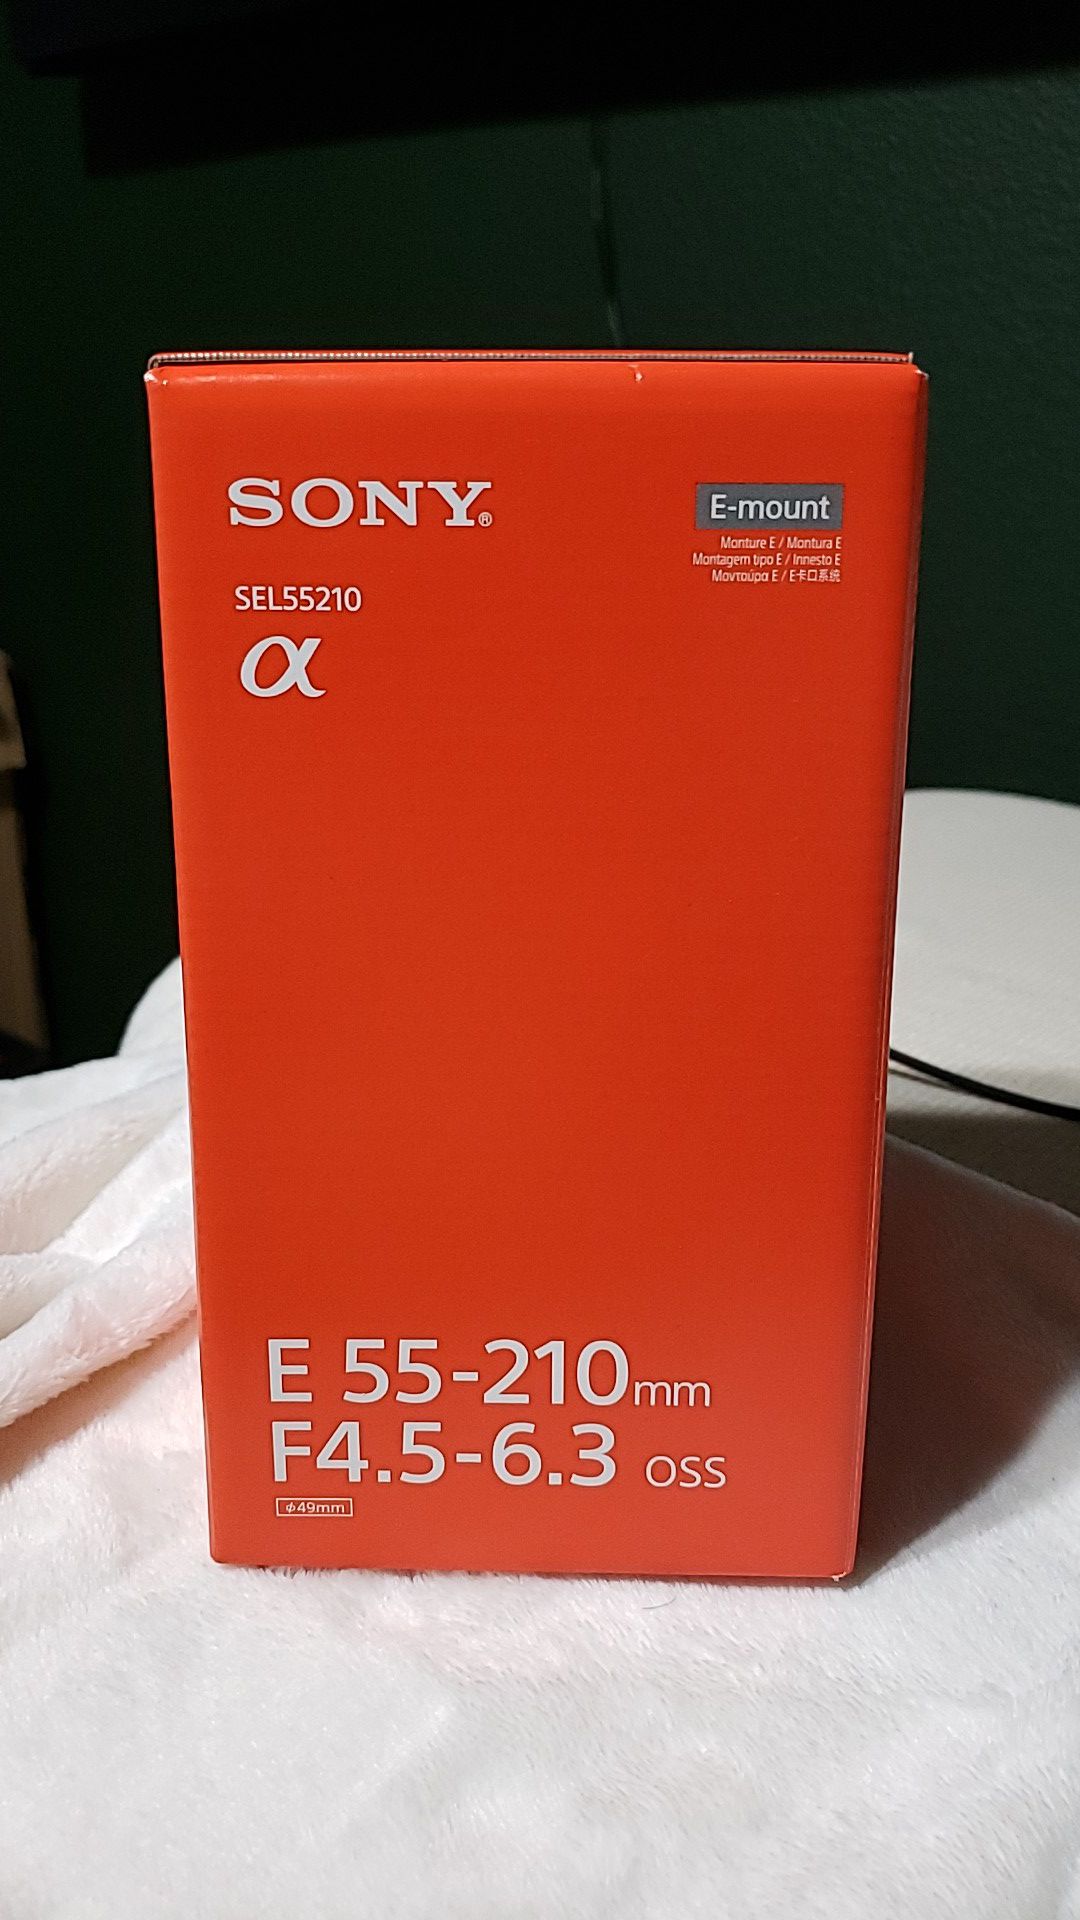 NEW: Sony 55-210mm